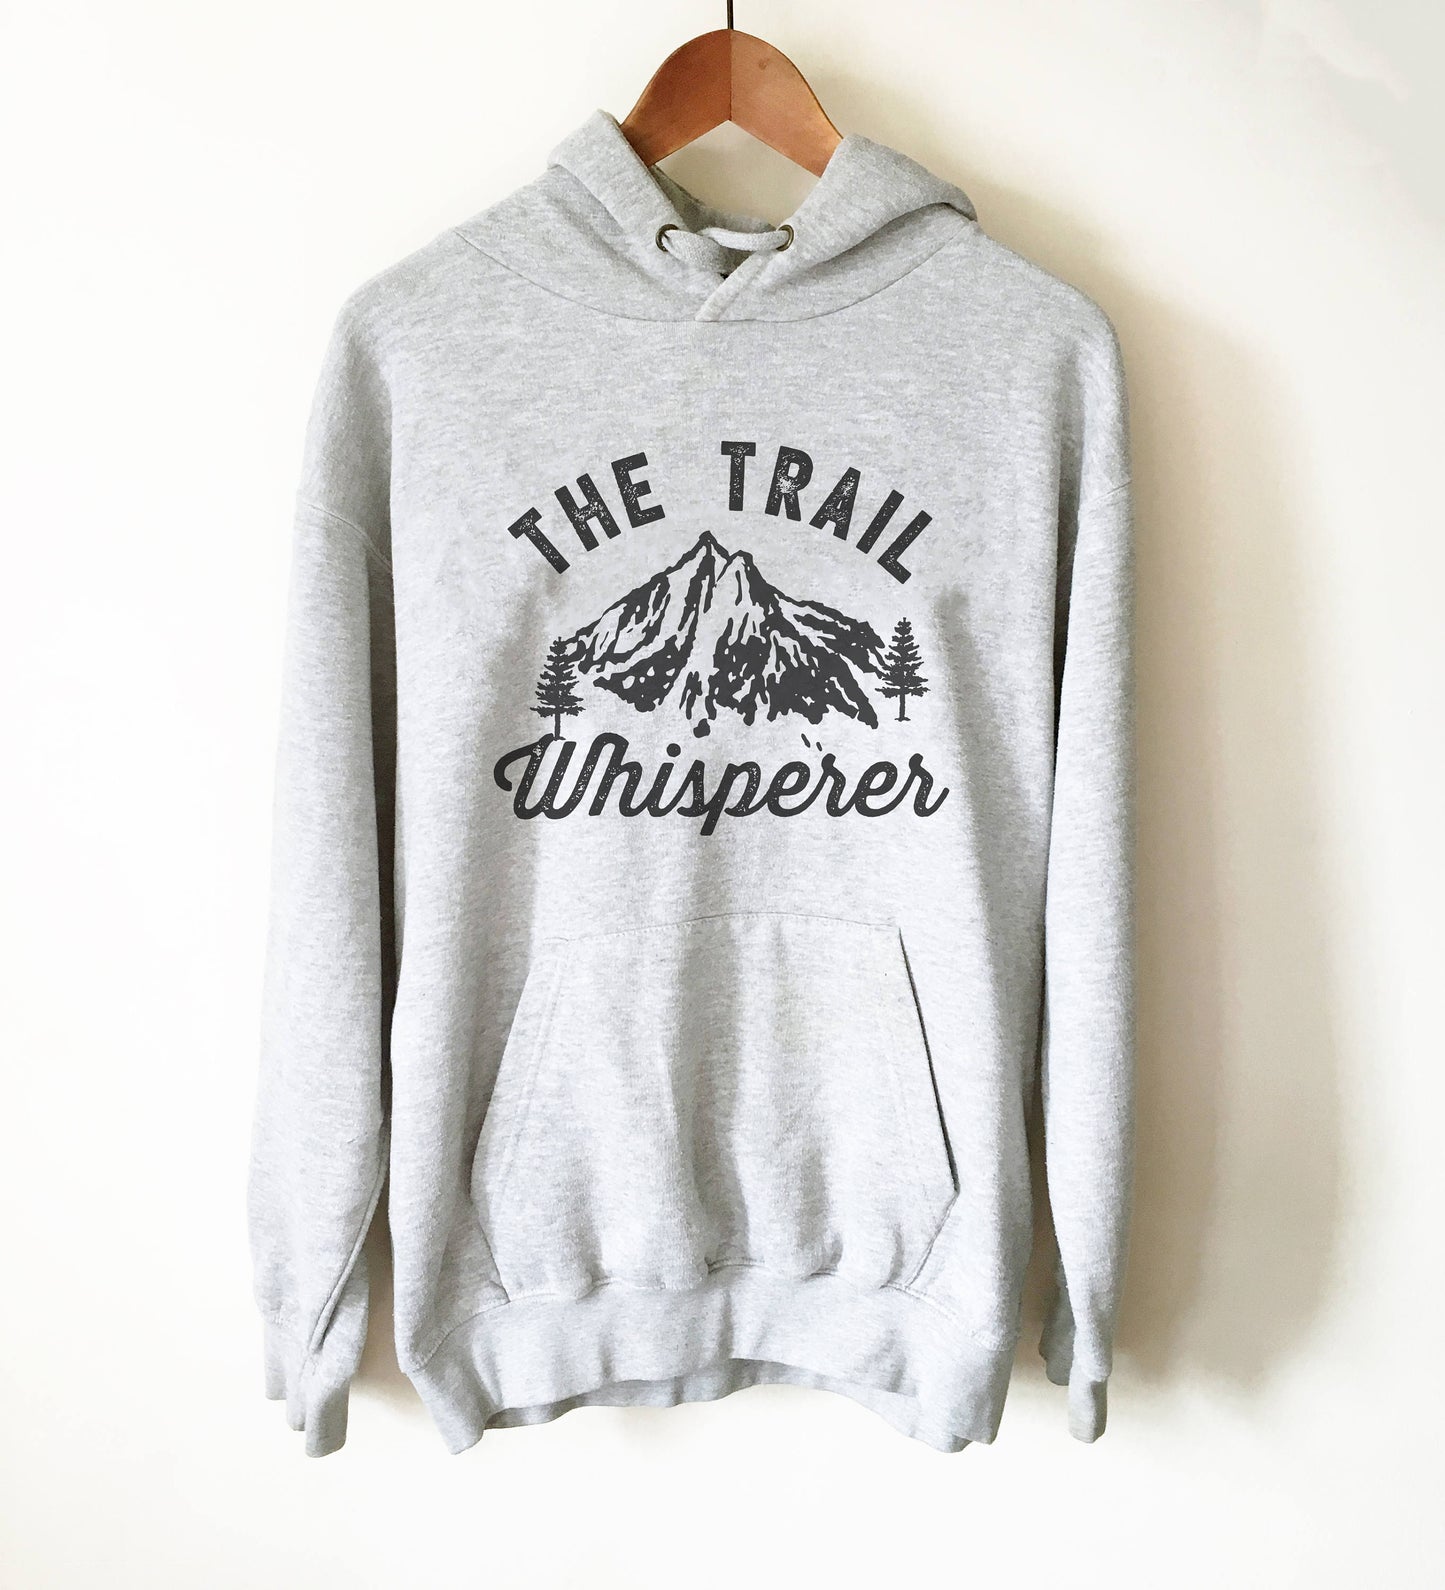 The Trail Whisperer Hoodie - Hiking hoodie, Hiking shirt, Camping hoodie, Hiking gift, Hiking sweatshirt